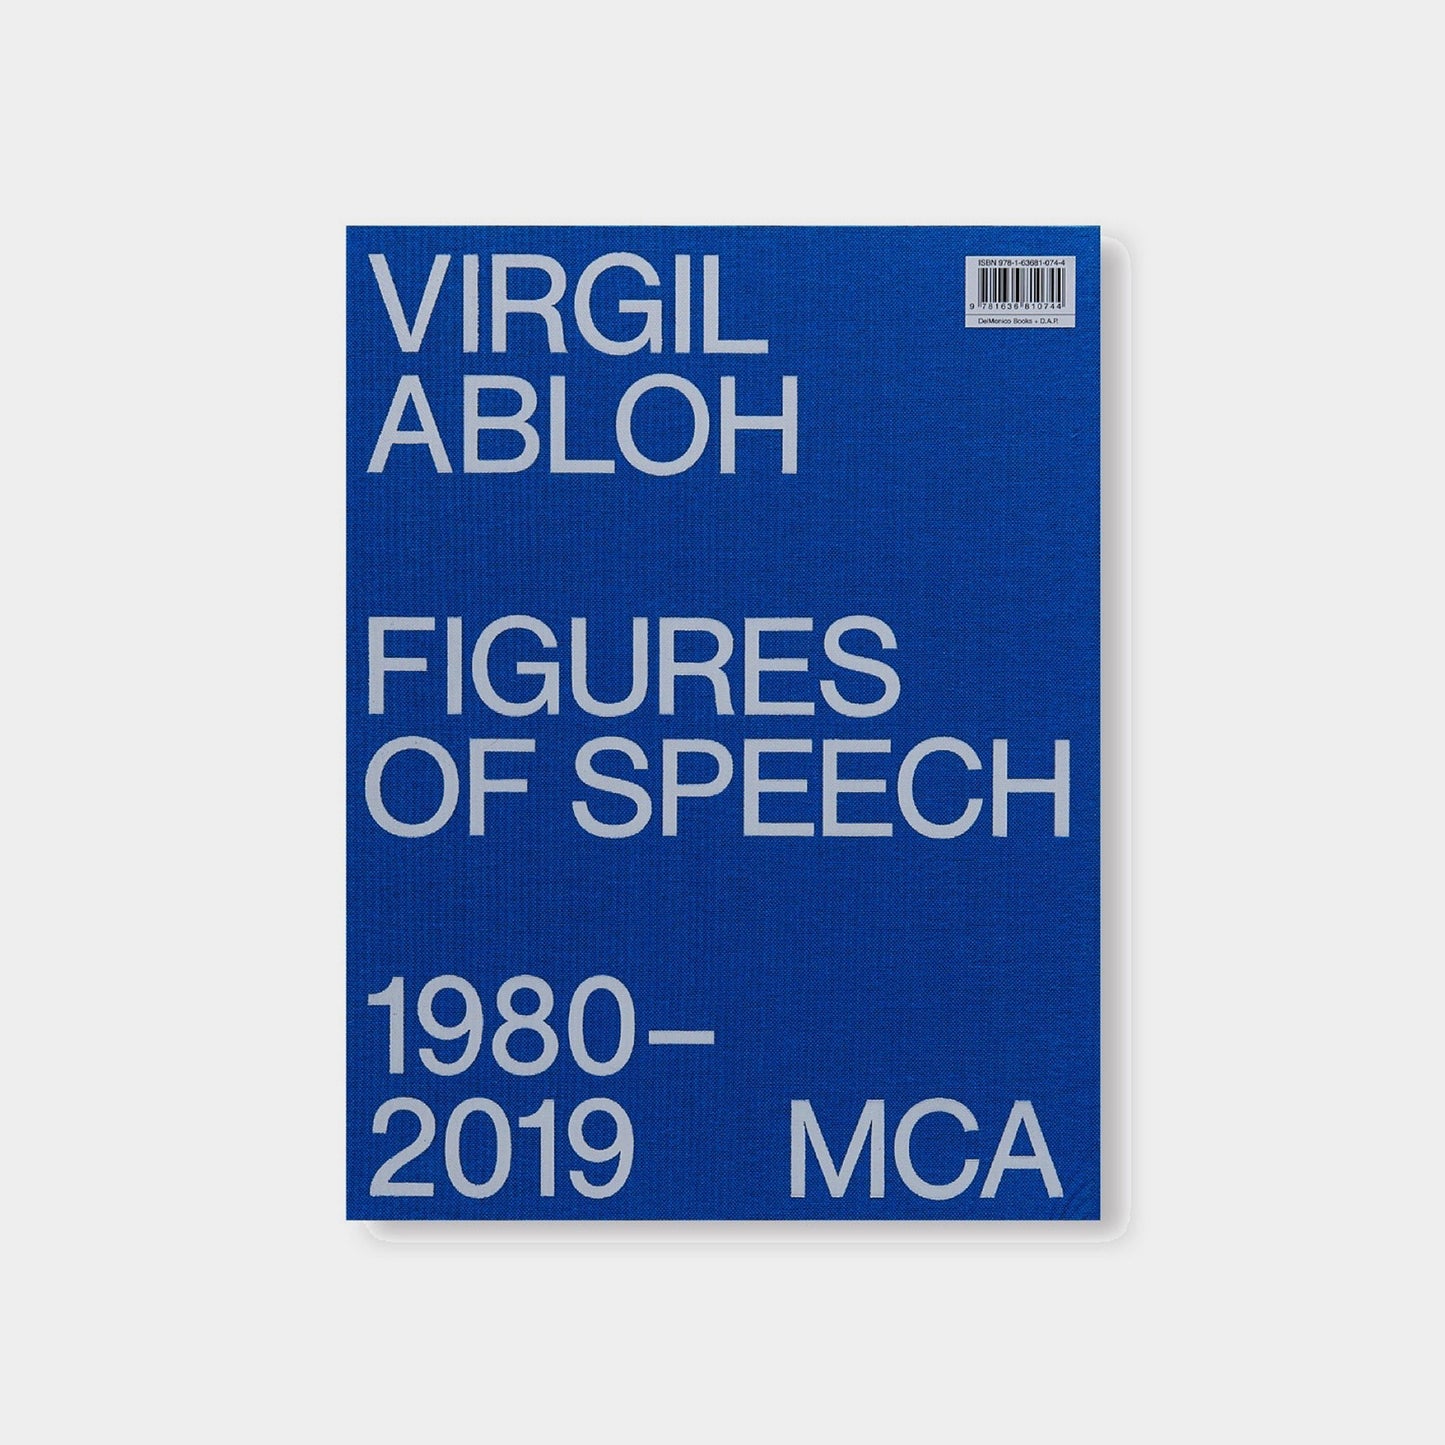 FIGURES OF SPEECH by Virgil Abloh